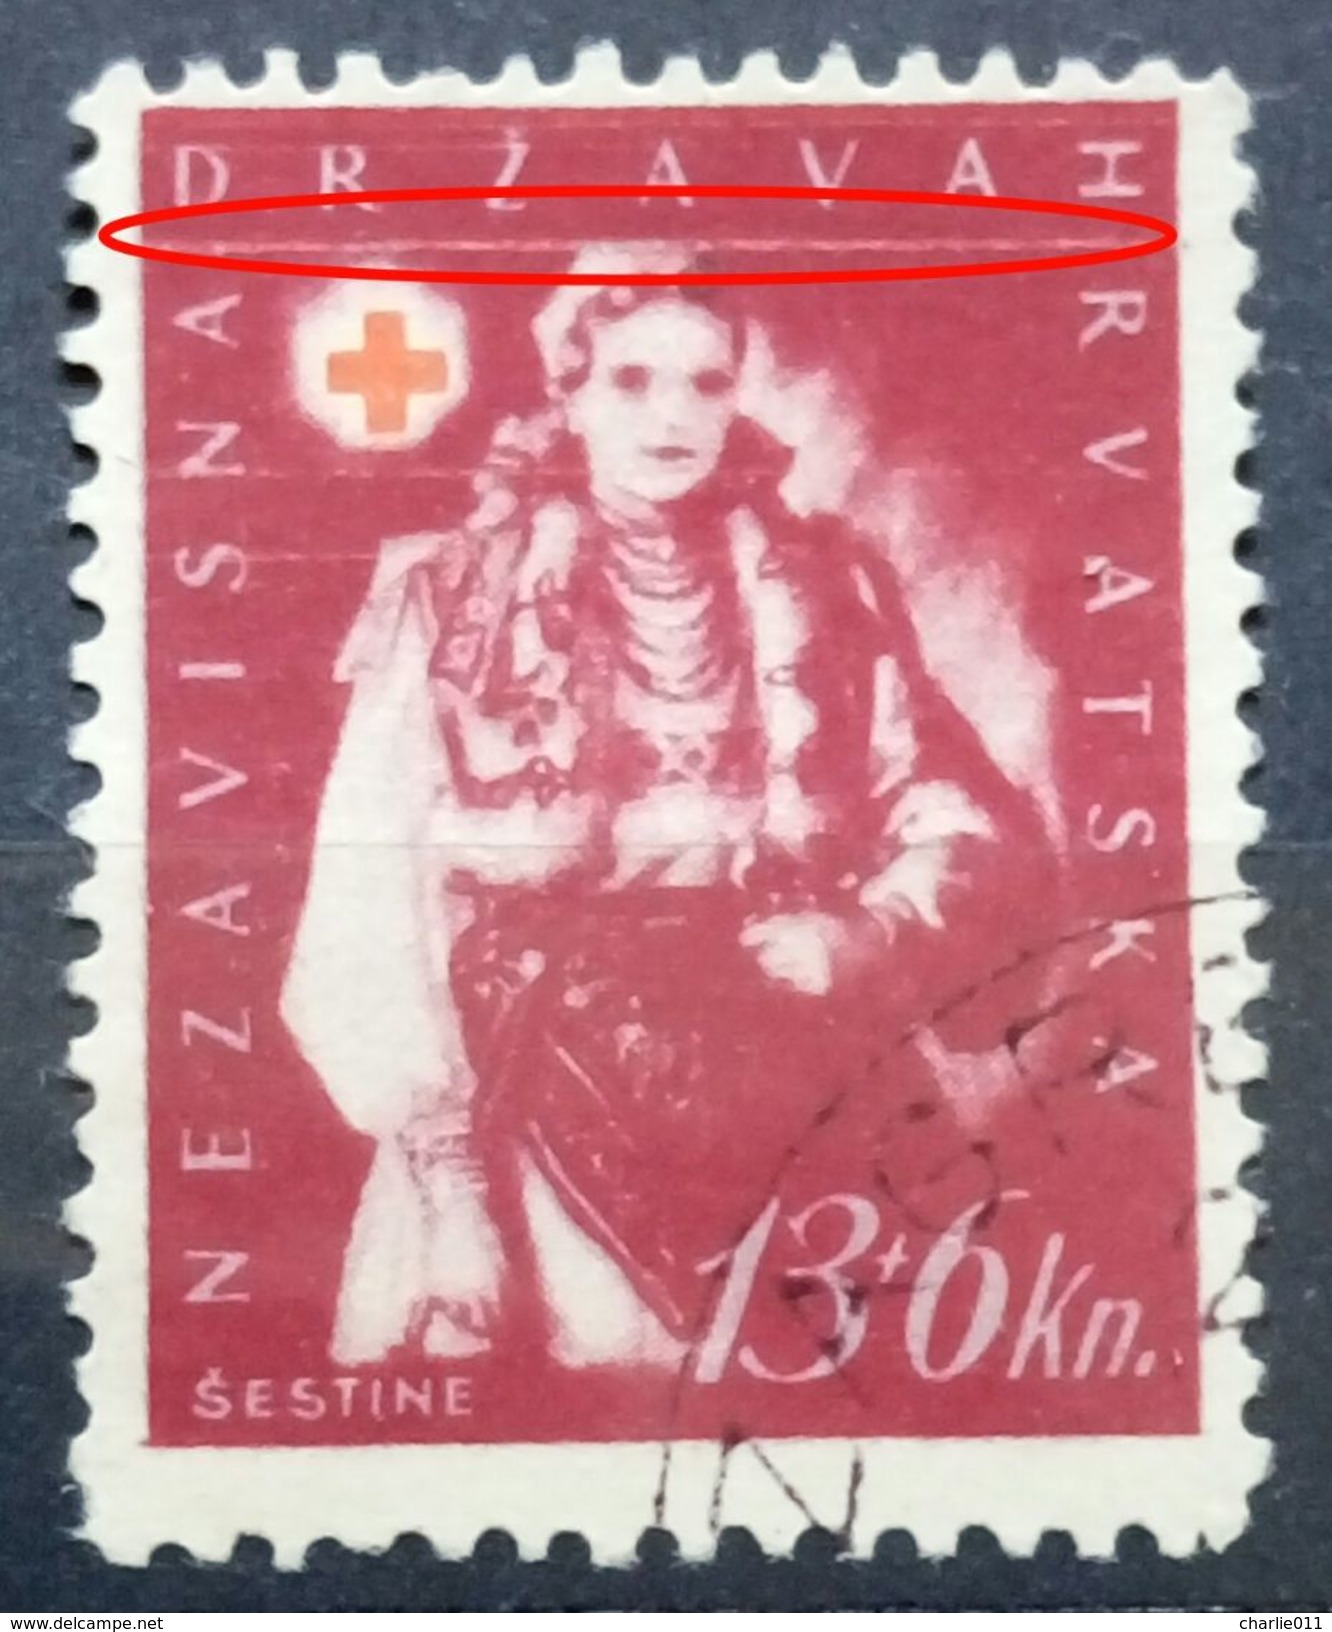 RED CROSS-13+6 K-NATIONAL COSTUMES-ŠESTINE-ERROR-LINE-RARE-NDH-CROATIA-1942 - Croatia